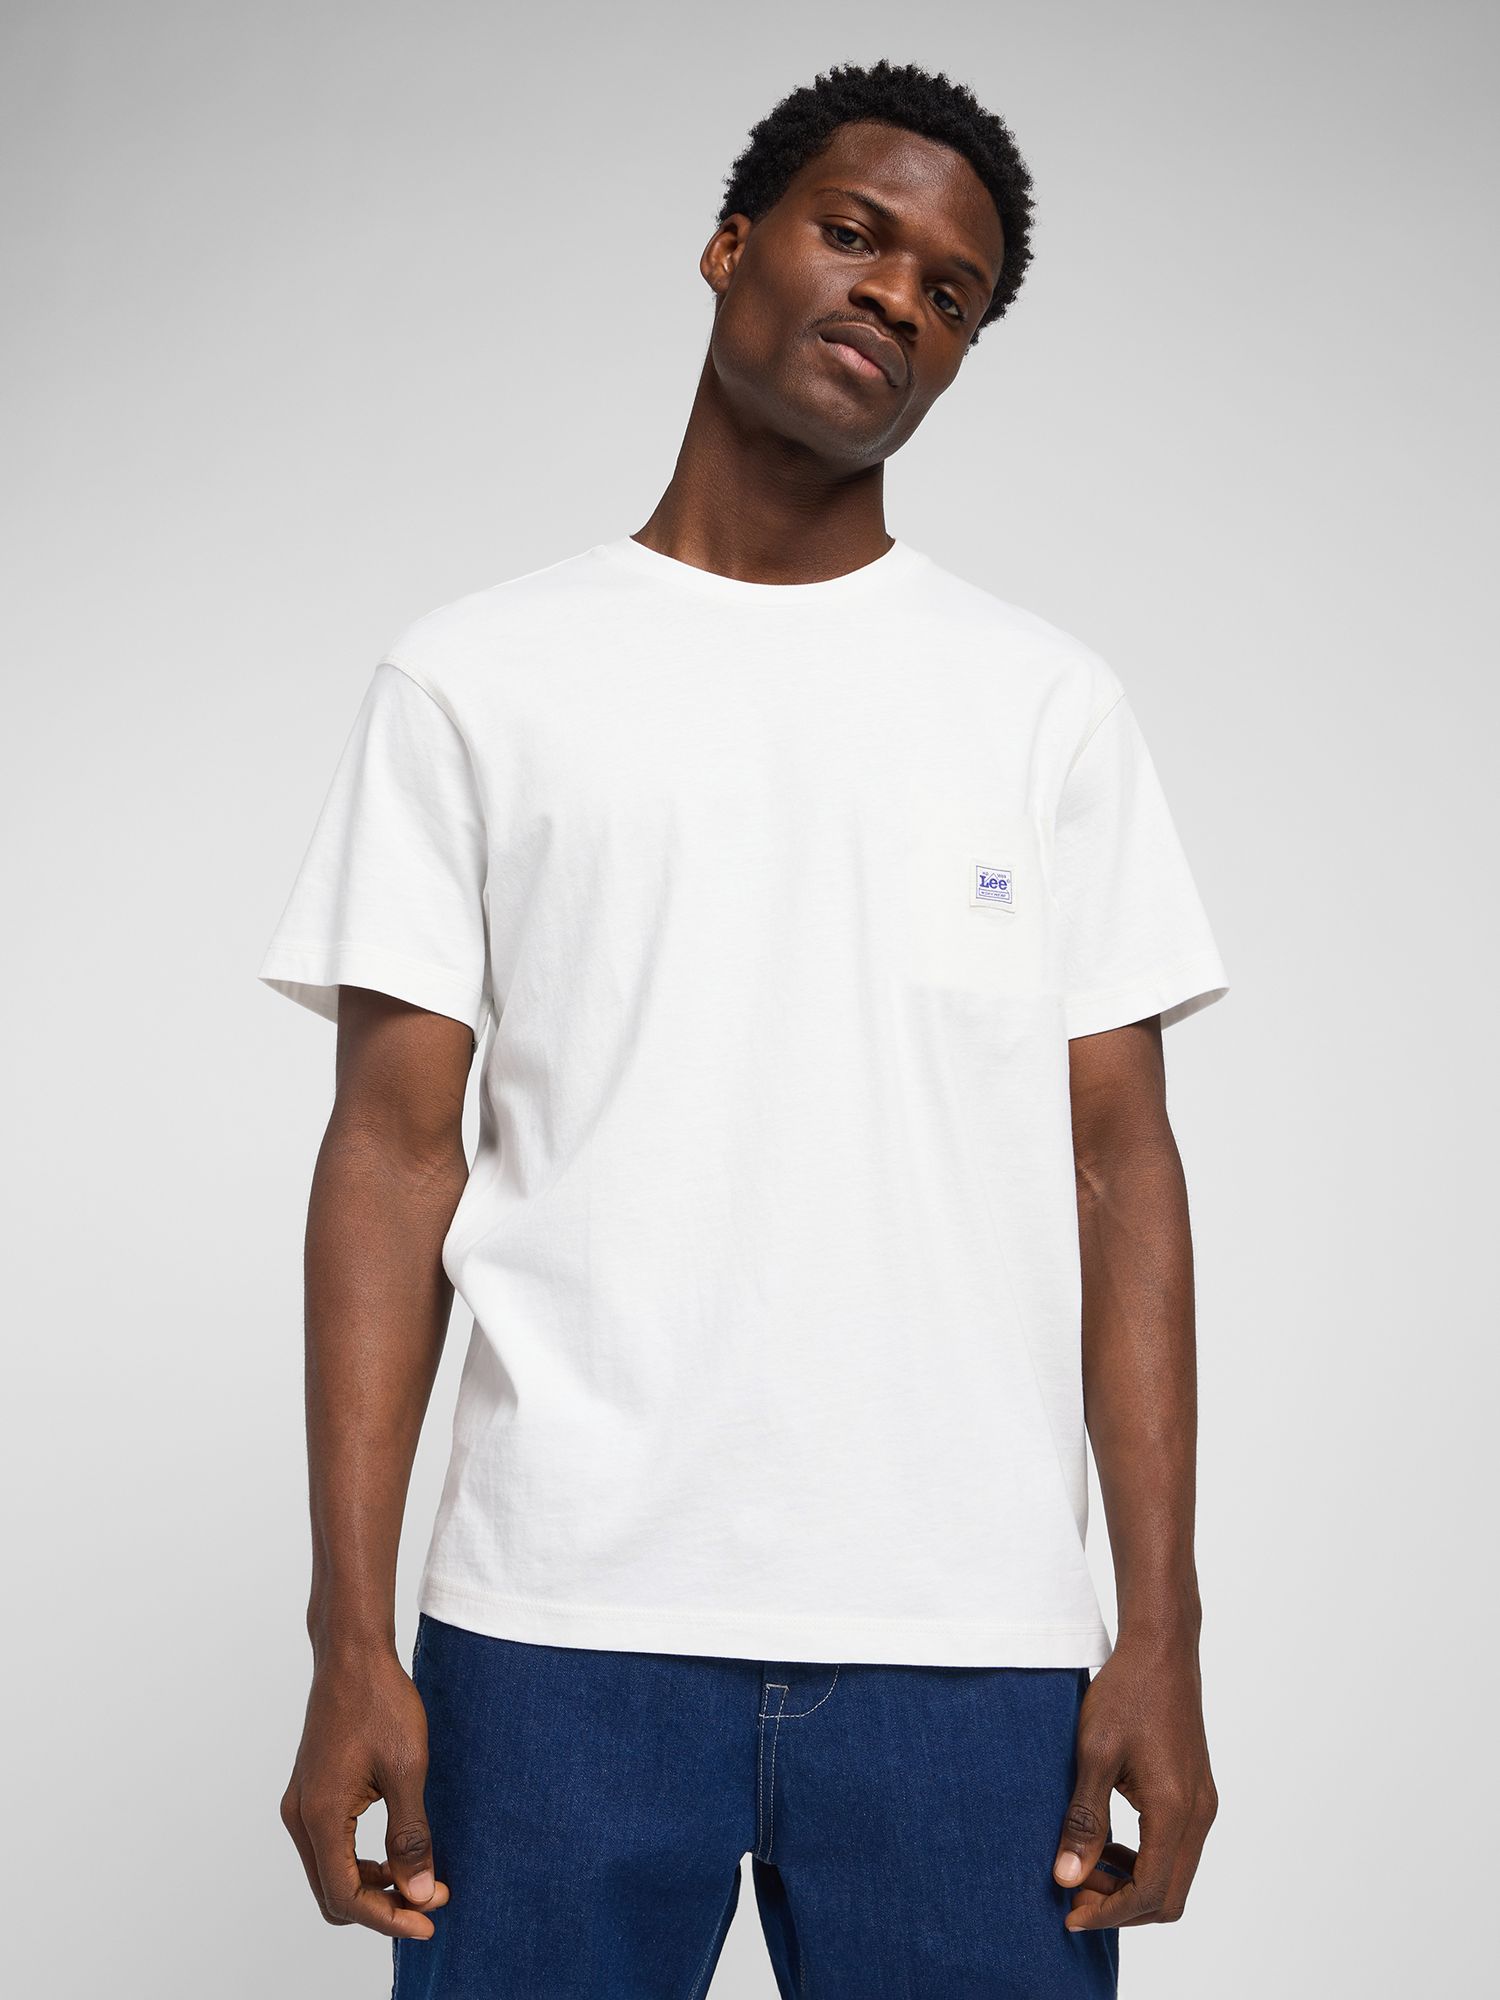 Lee Cotton T-Shirt, Bright White, XL